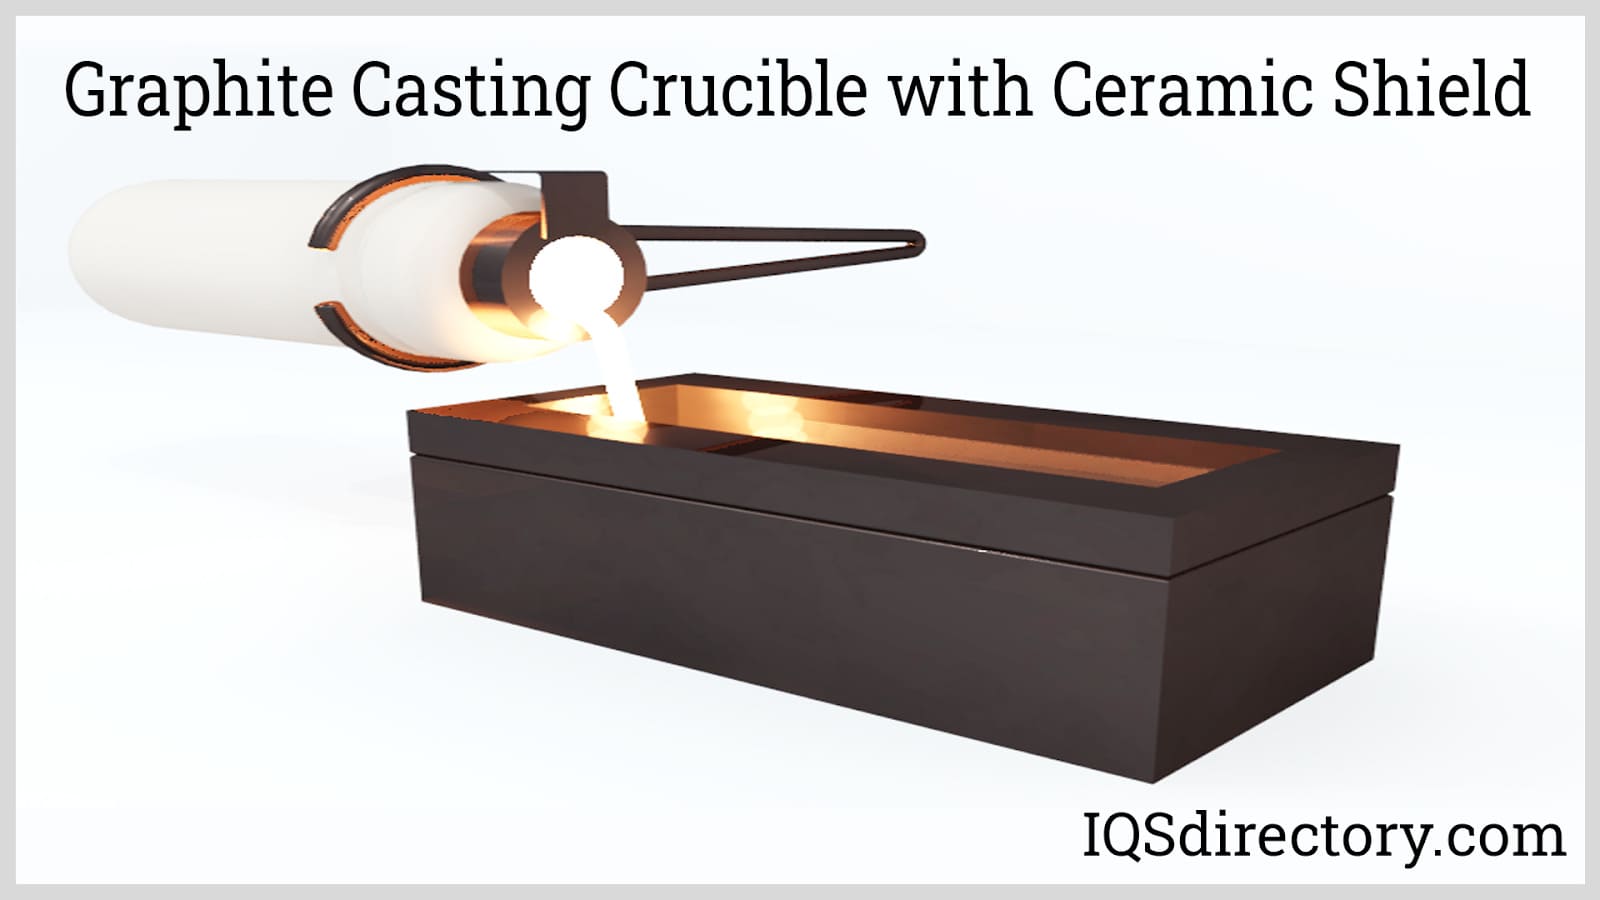 Graphite Casting Crucible with Ceramic Shield